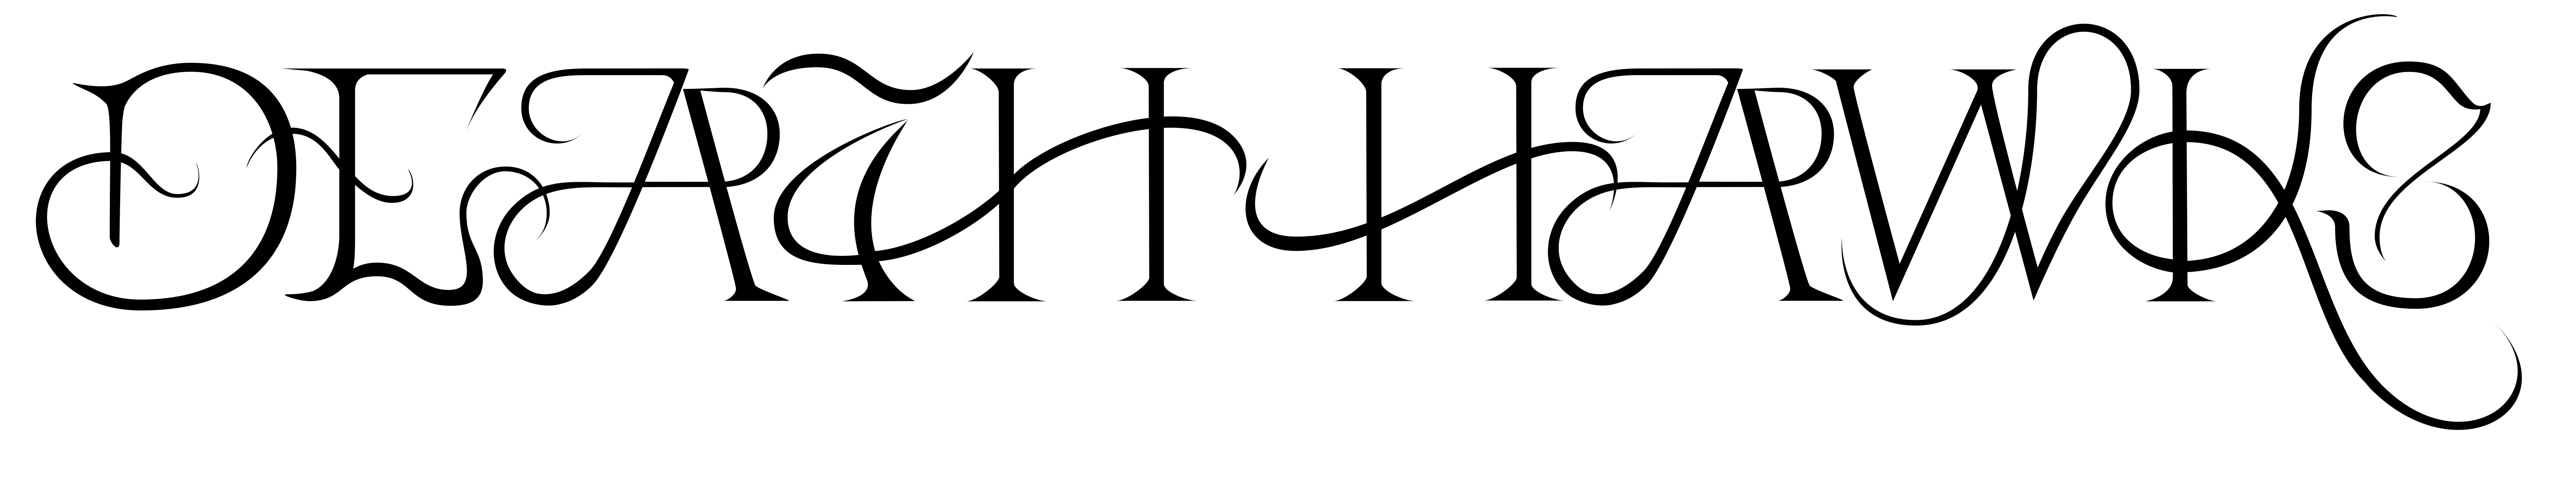 deathhawks_logo